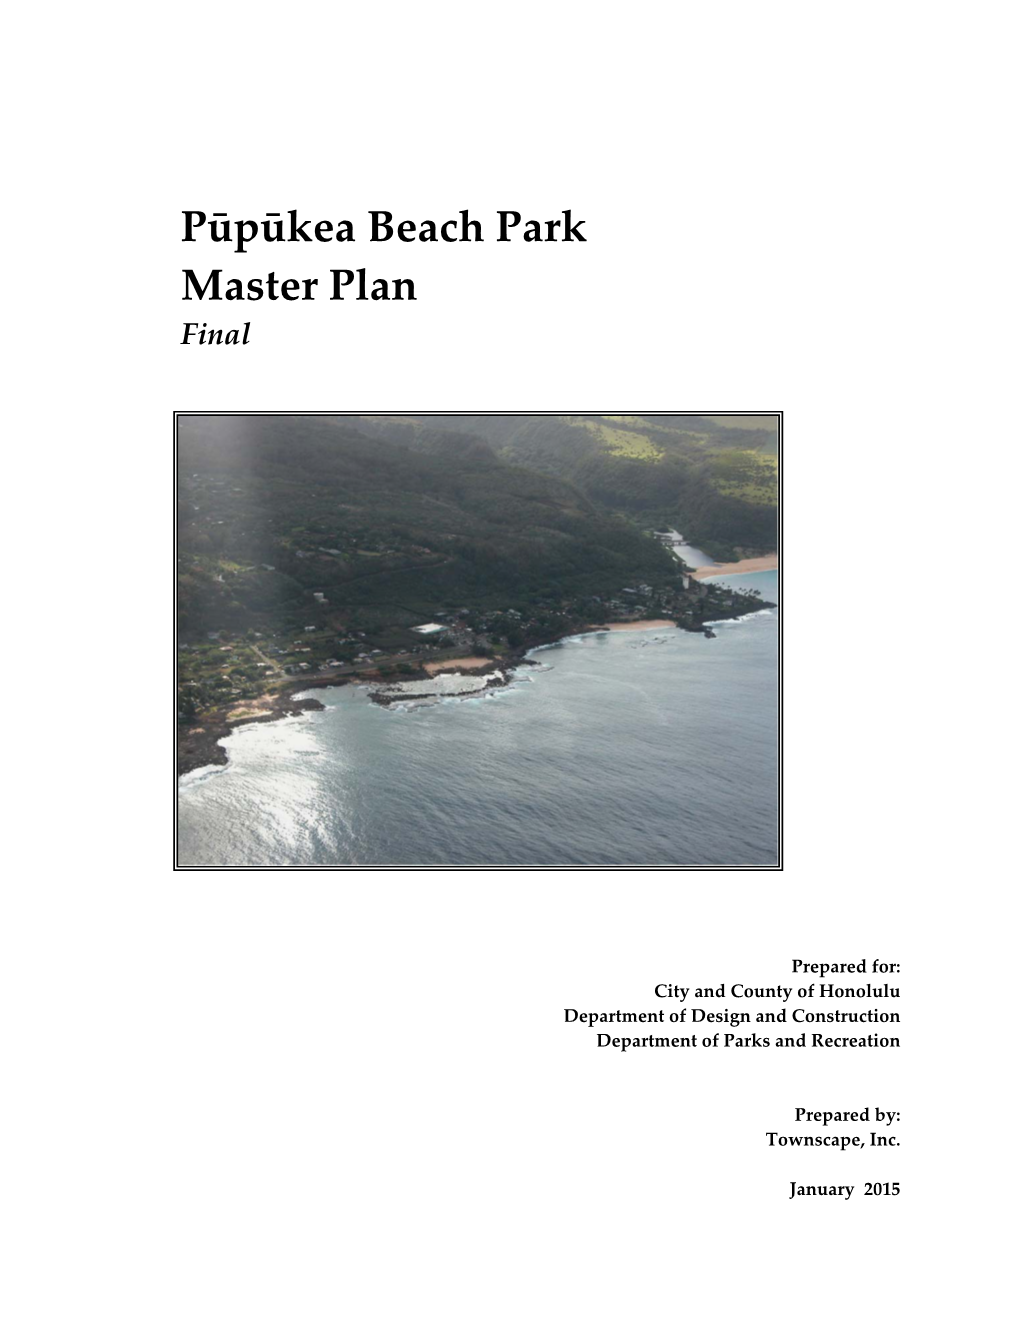 Pūpūkea Beach Park Master Plan Final